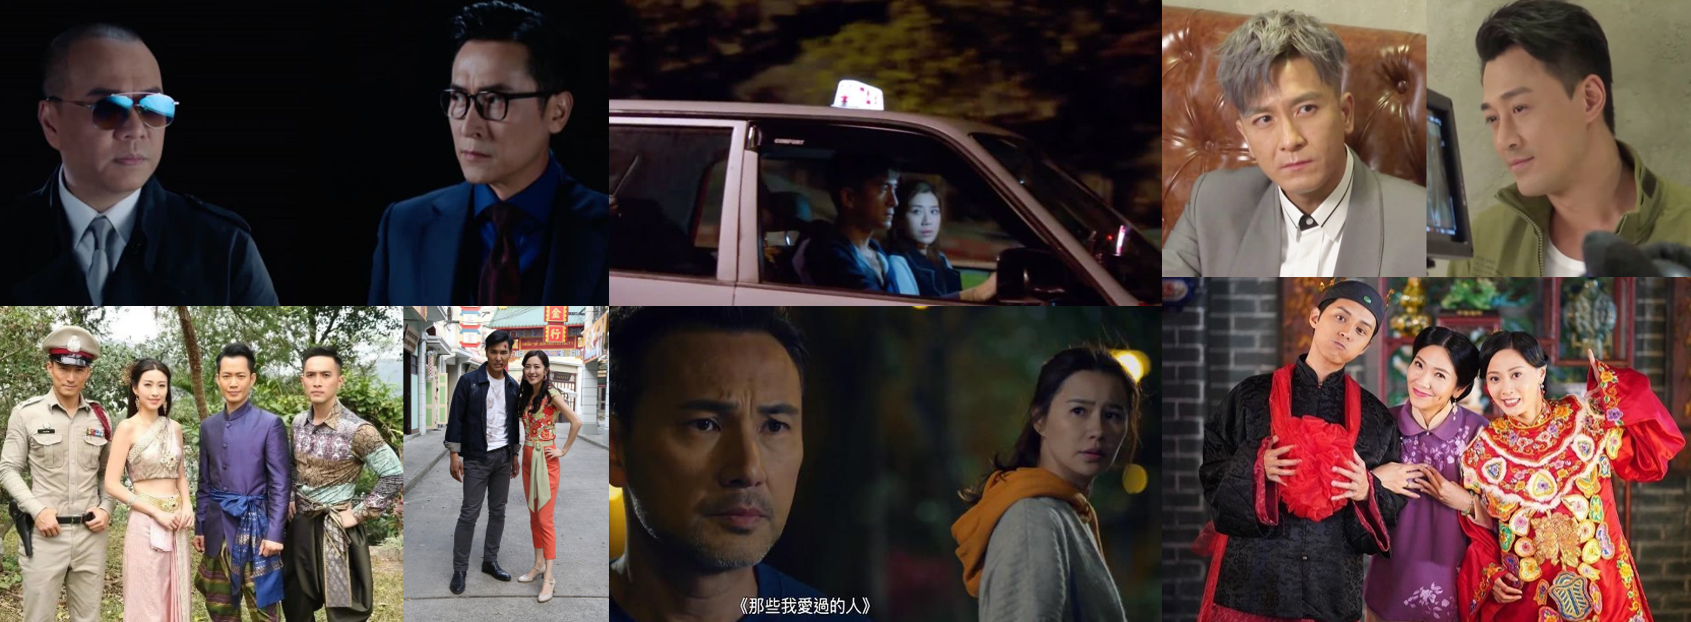 11 TVB Dramas 2020 Teasers released